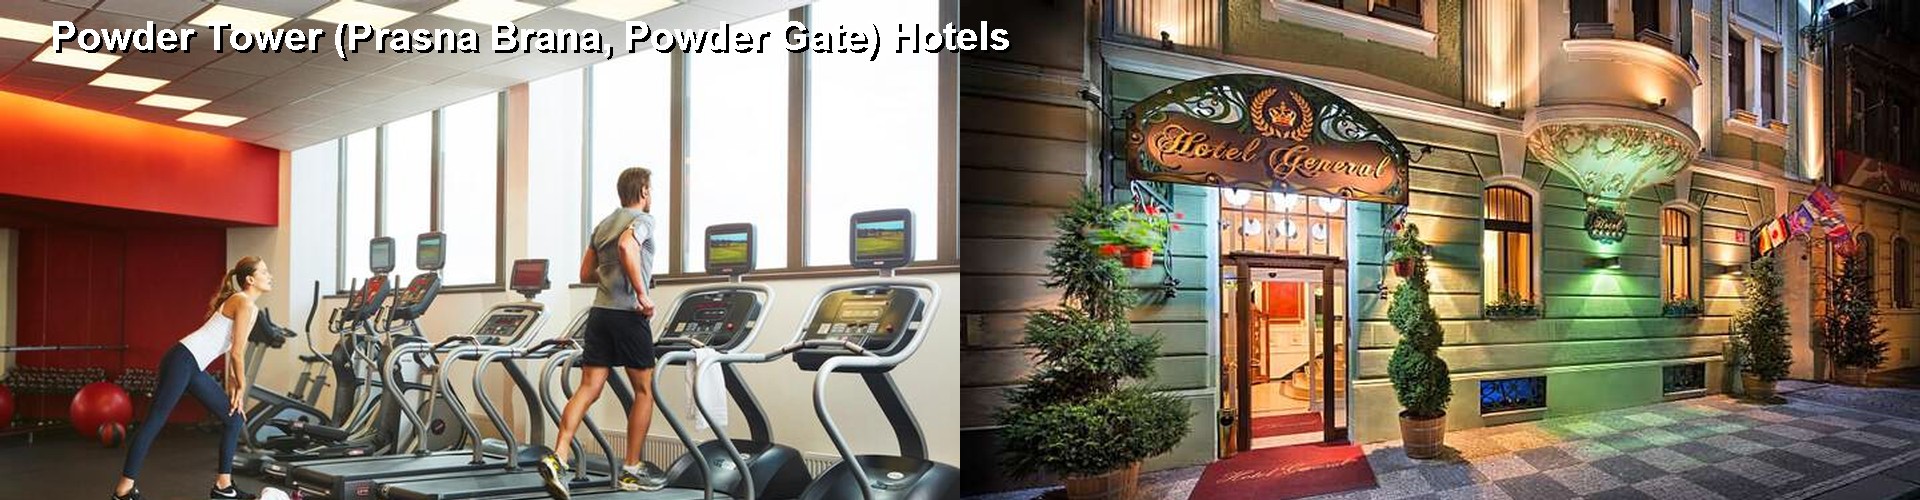 5 Best Hotels near Powder Tower (Prasna Brana, Powder Gate)